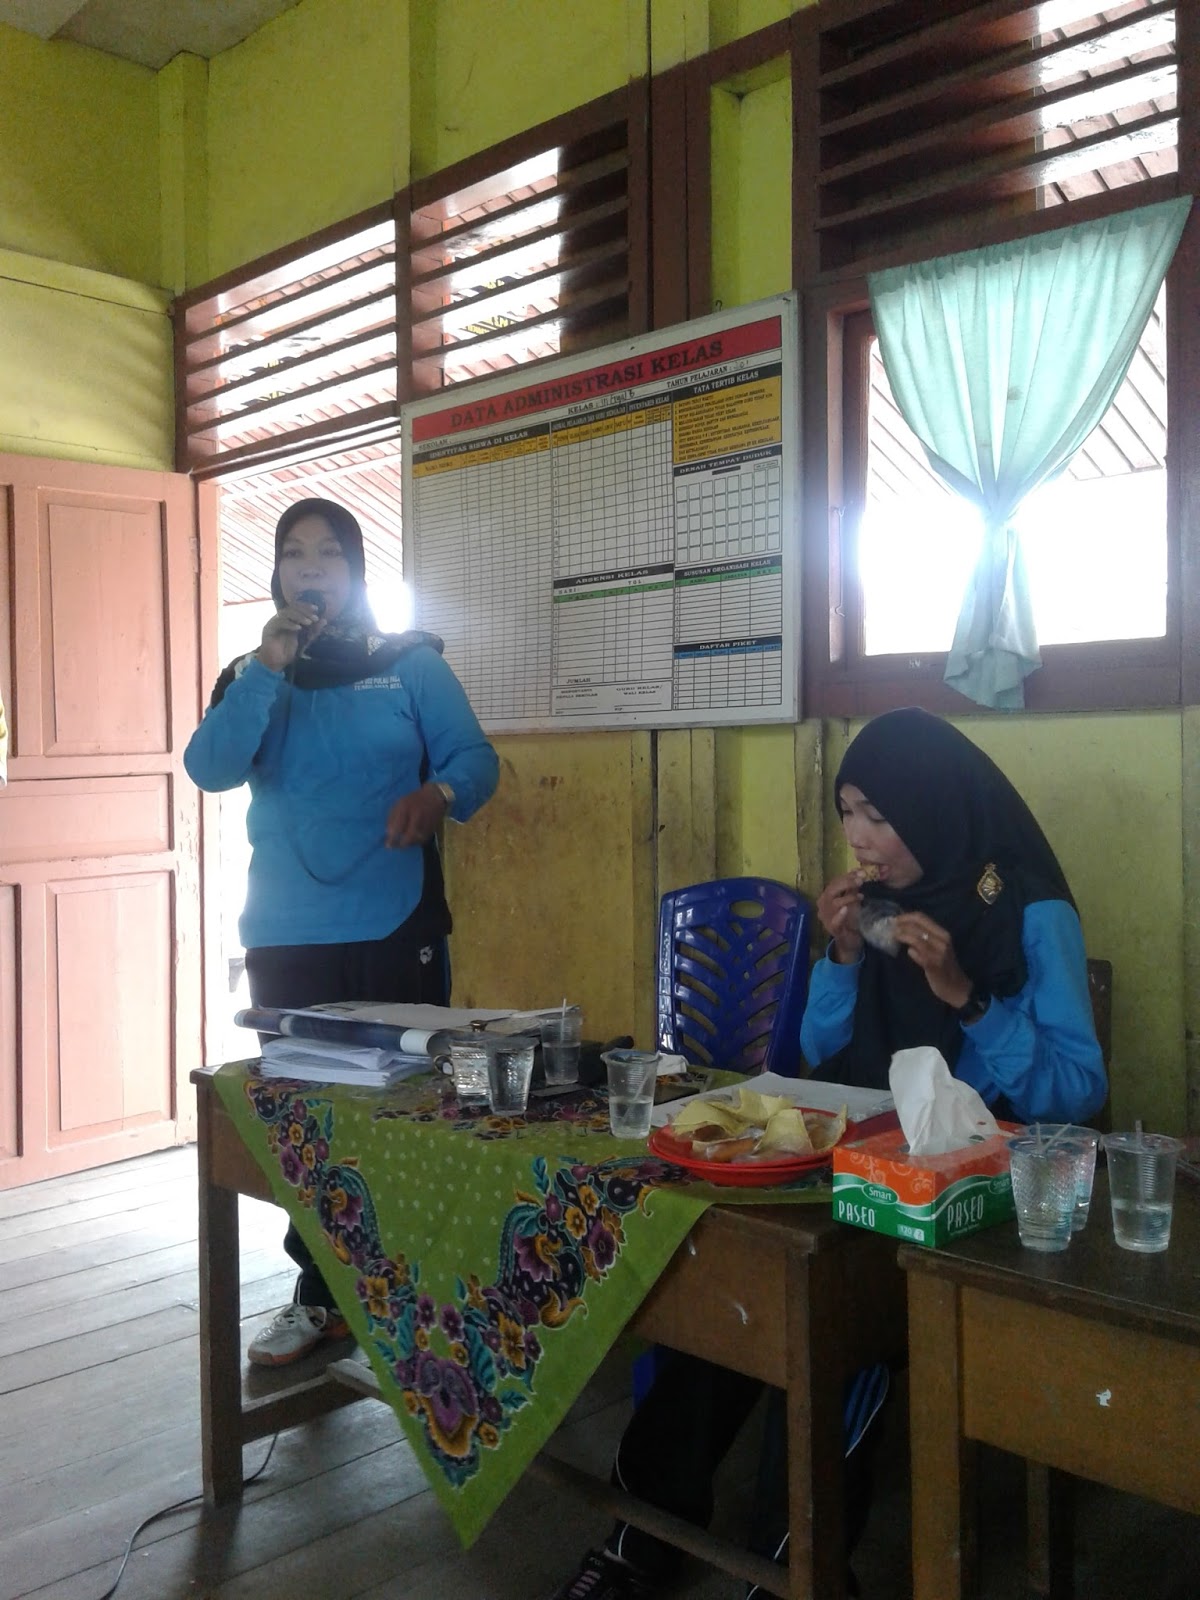 Workshop Analisis dan Penyusunan Kalender Pendidikan KKM dan Penilaian Kurikulum 2013 KKG Gugus III Kapten Mukhtar SD Inti 002 Pulau Palas Kec